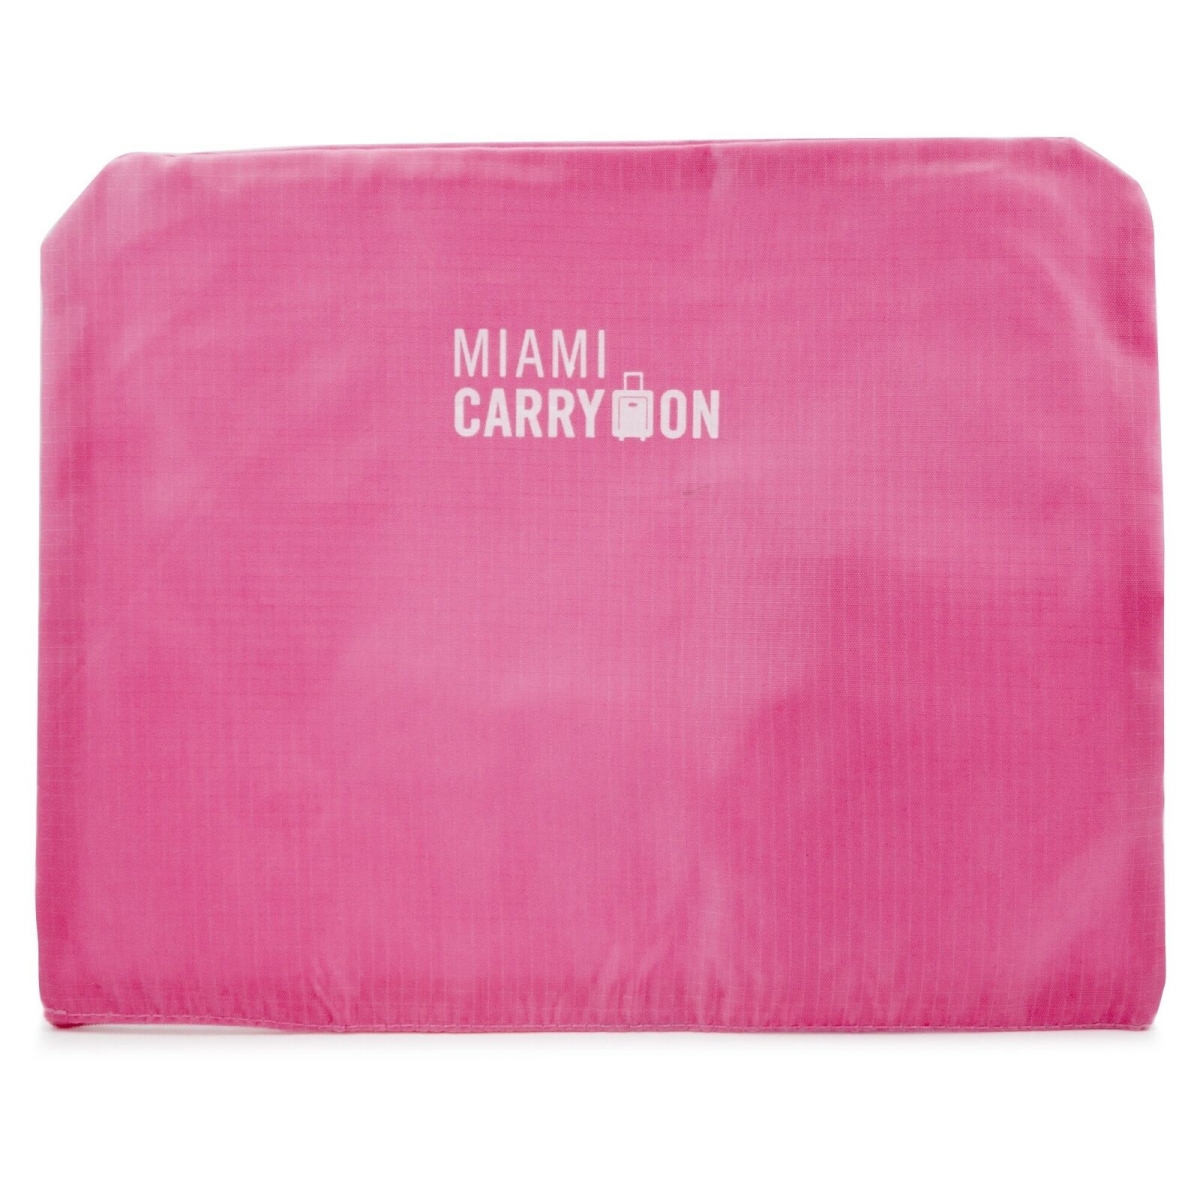 Picture of Miami Carryon TL6SBGPK  Packing Cubes Travelers Luggage Organizer Kit  Pink